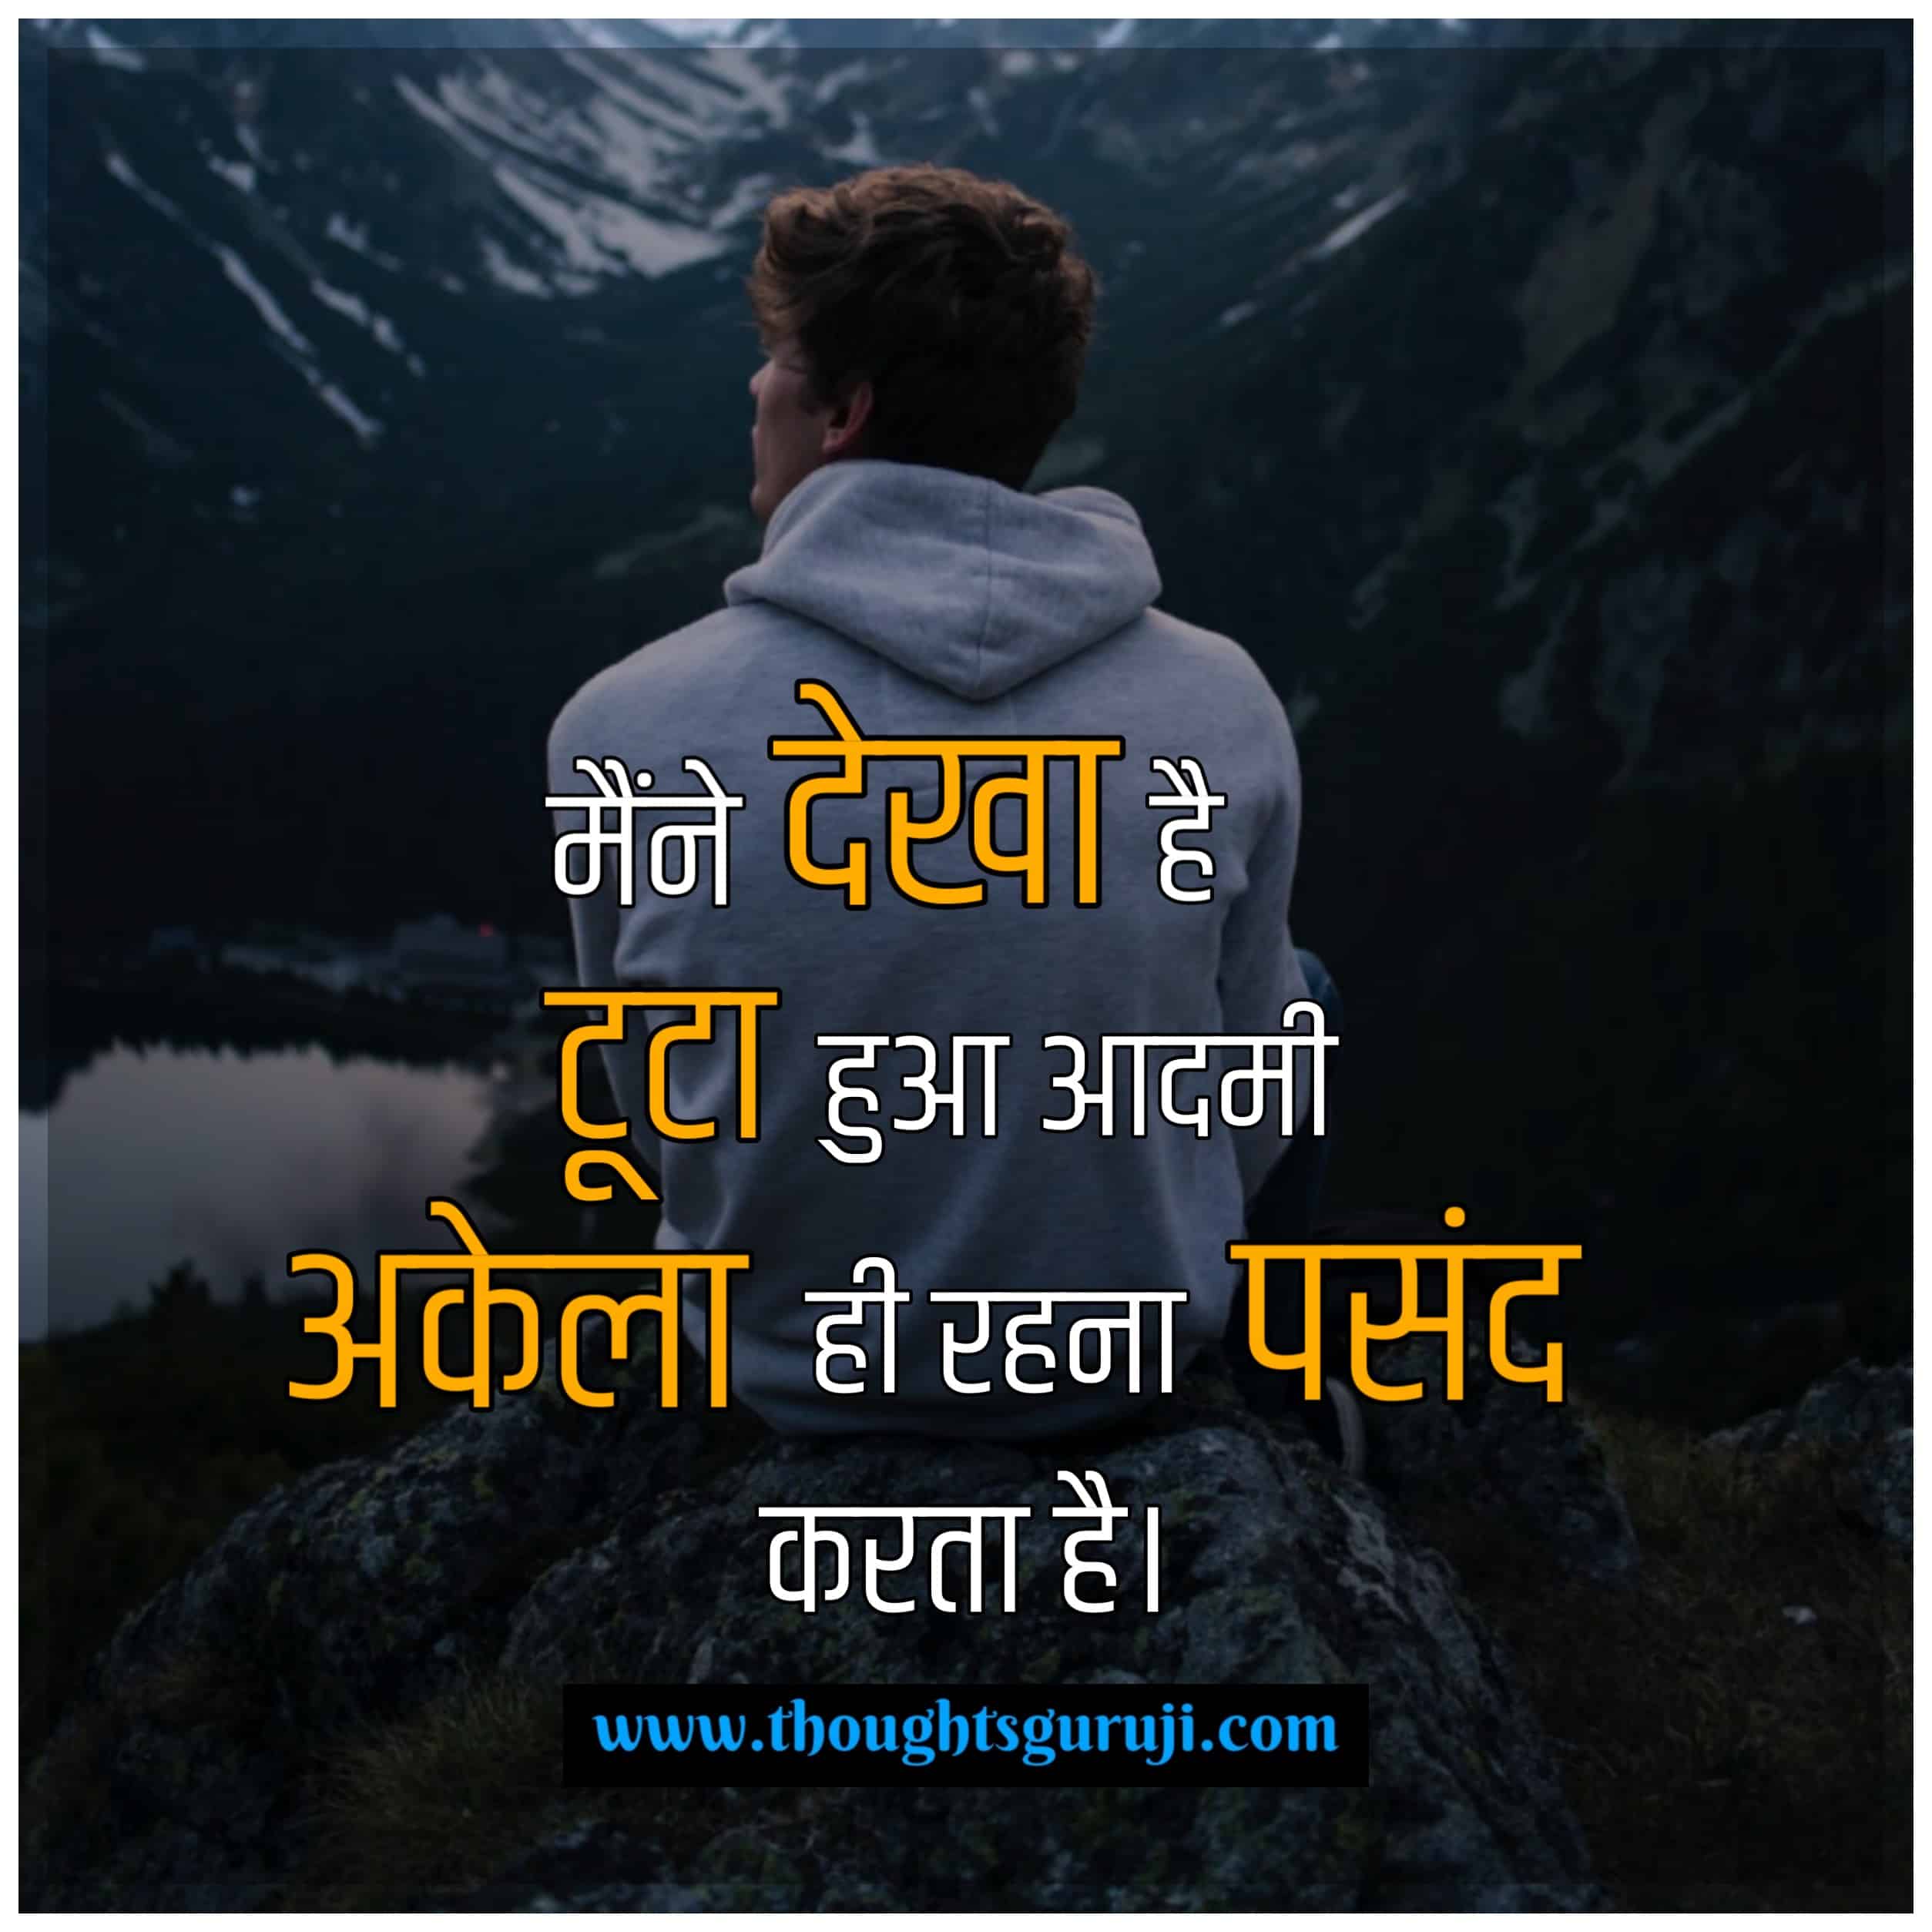 sad love quotes that make you cry and sayings hindi